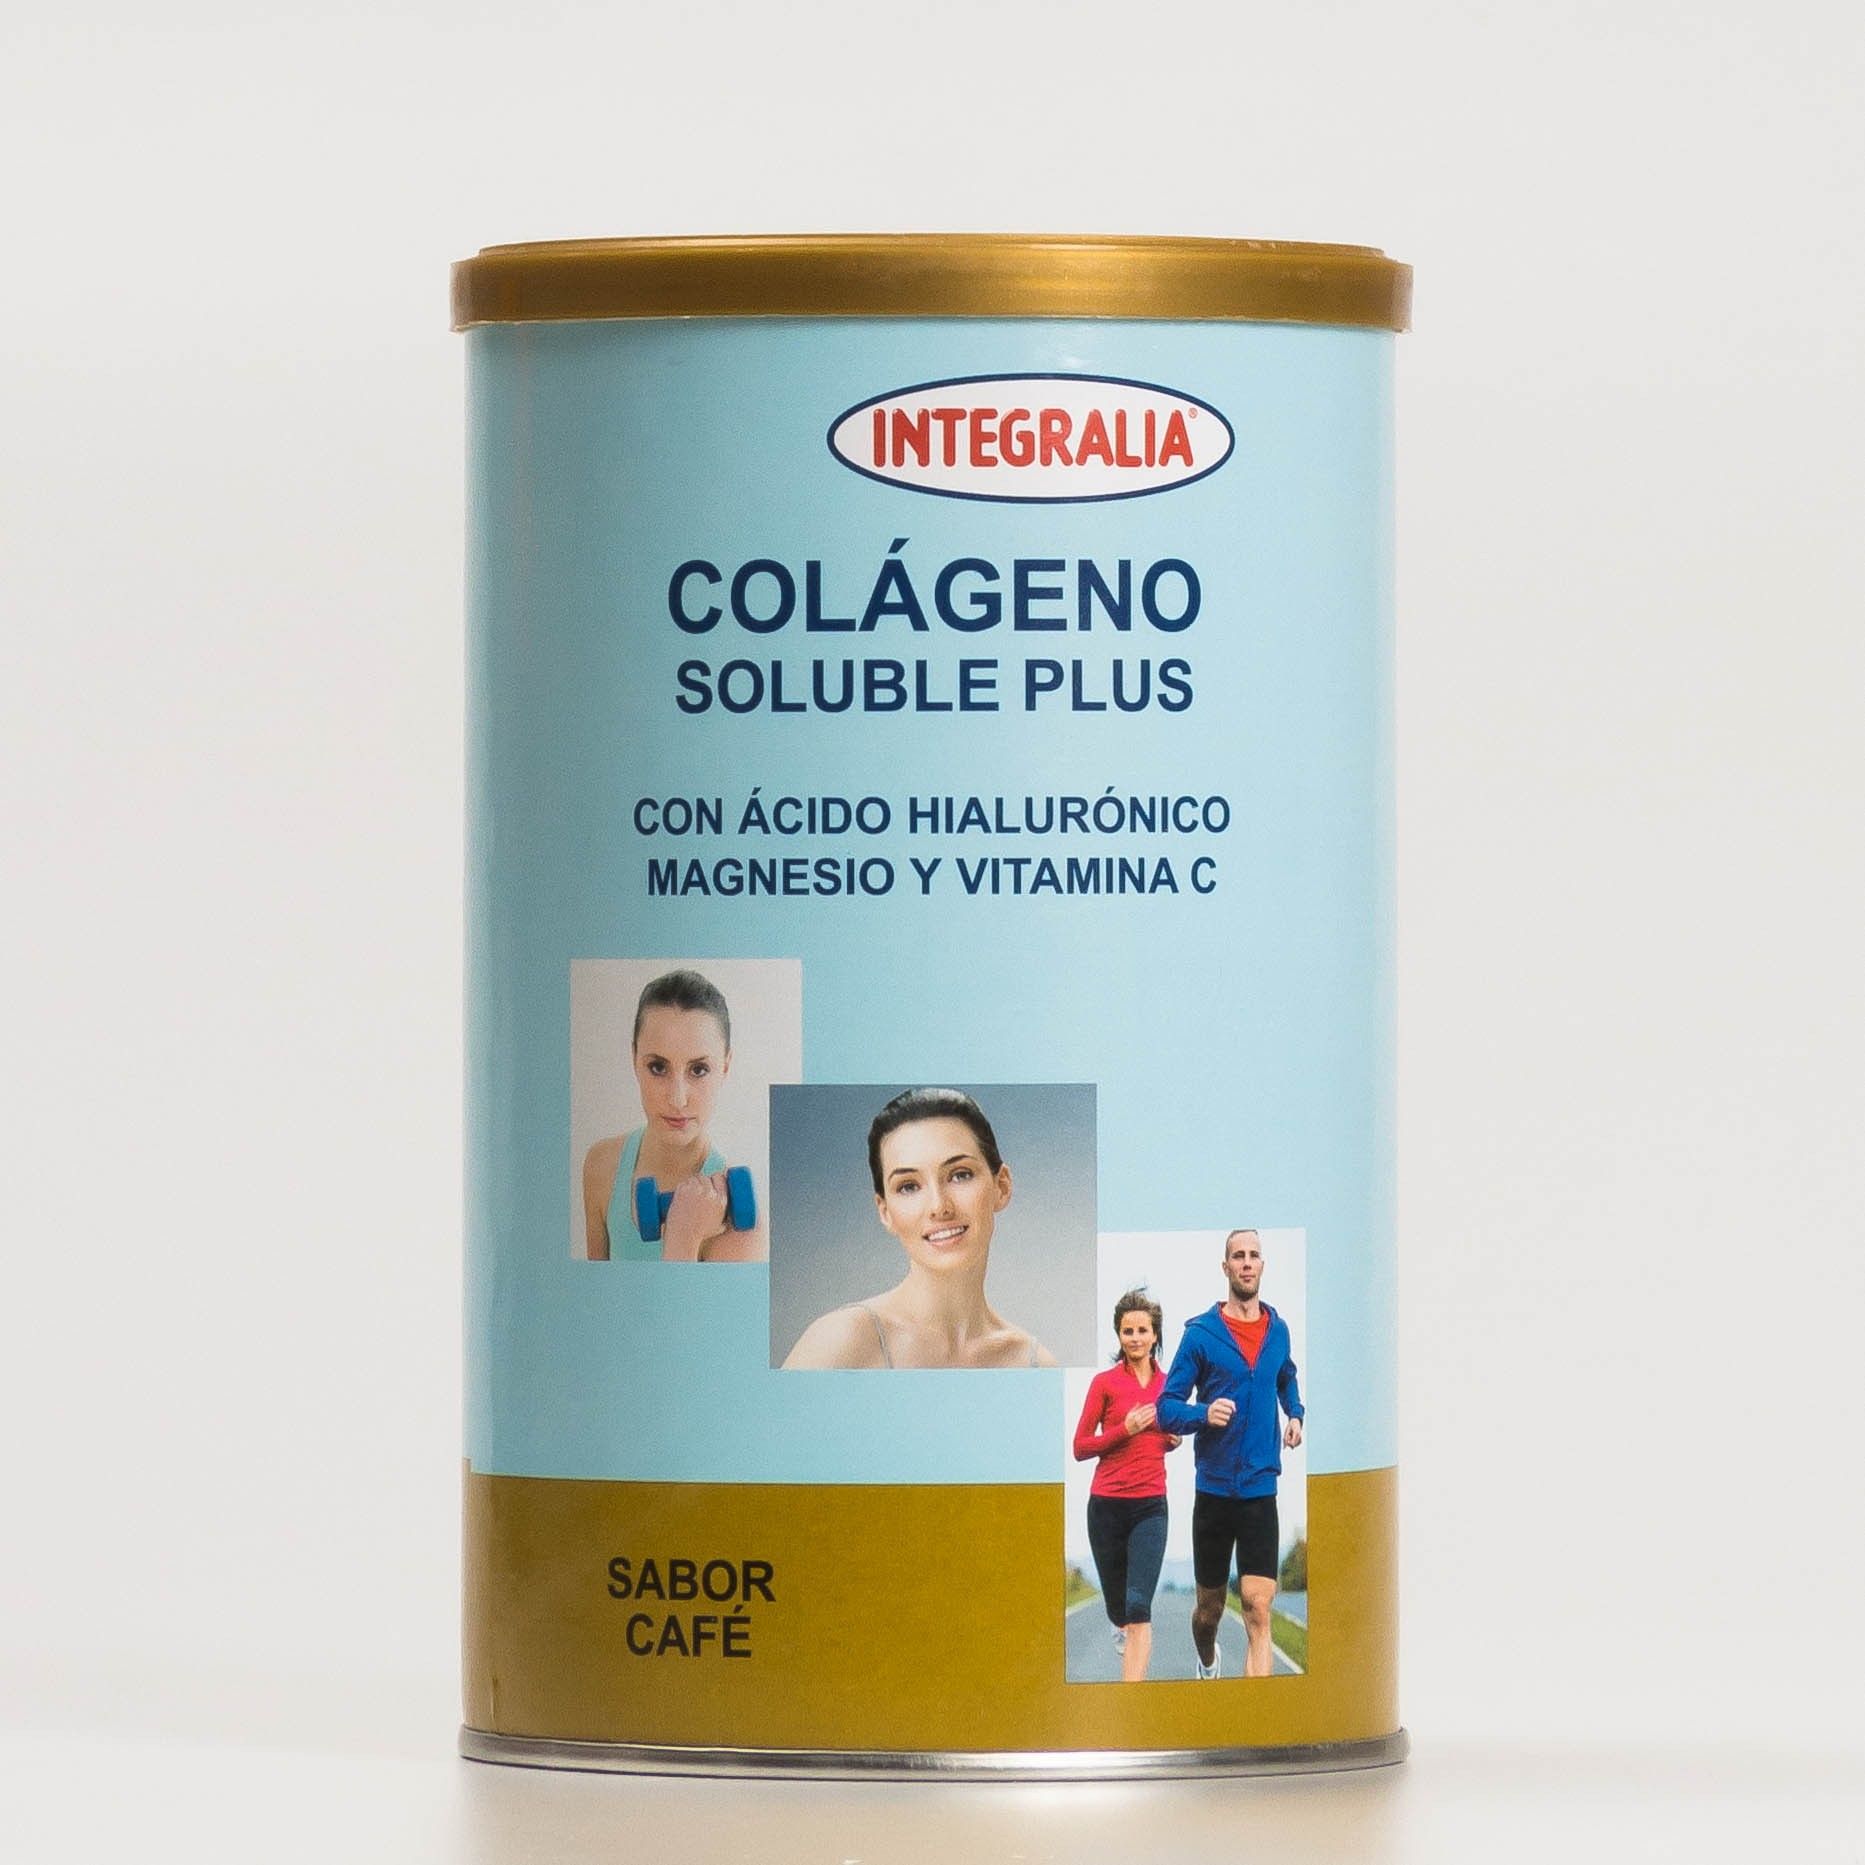 Colágeno soluble Plus Integralia sabor café